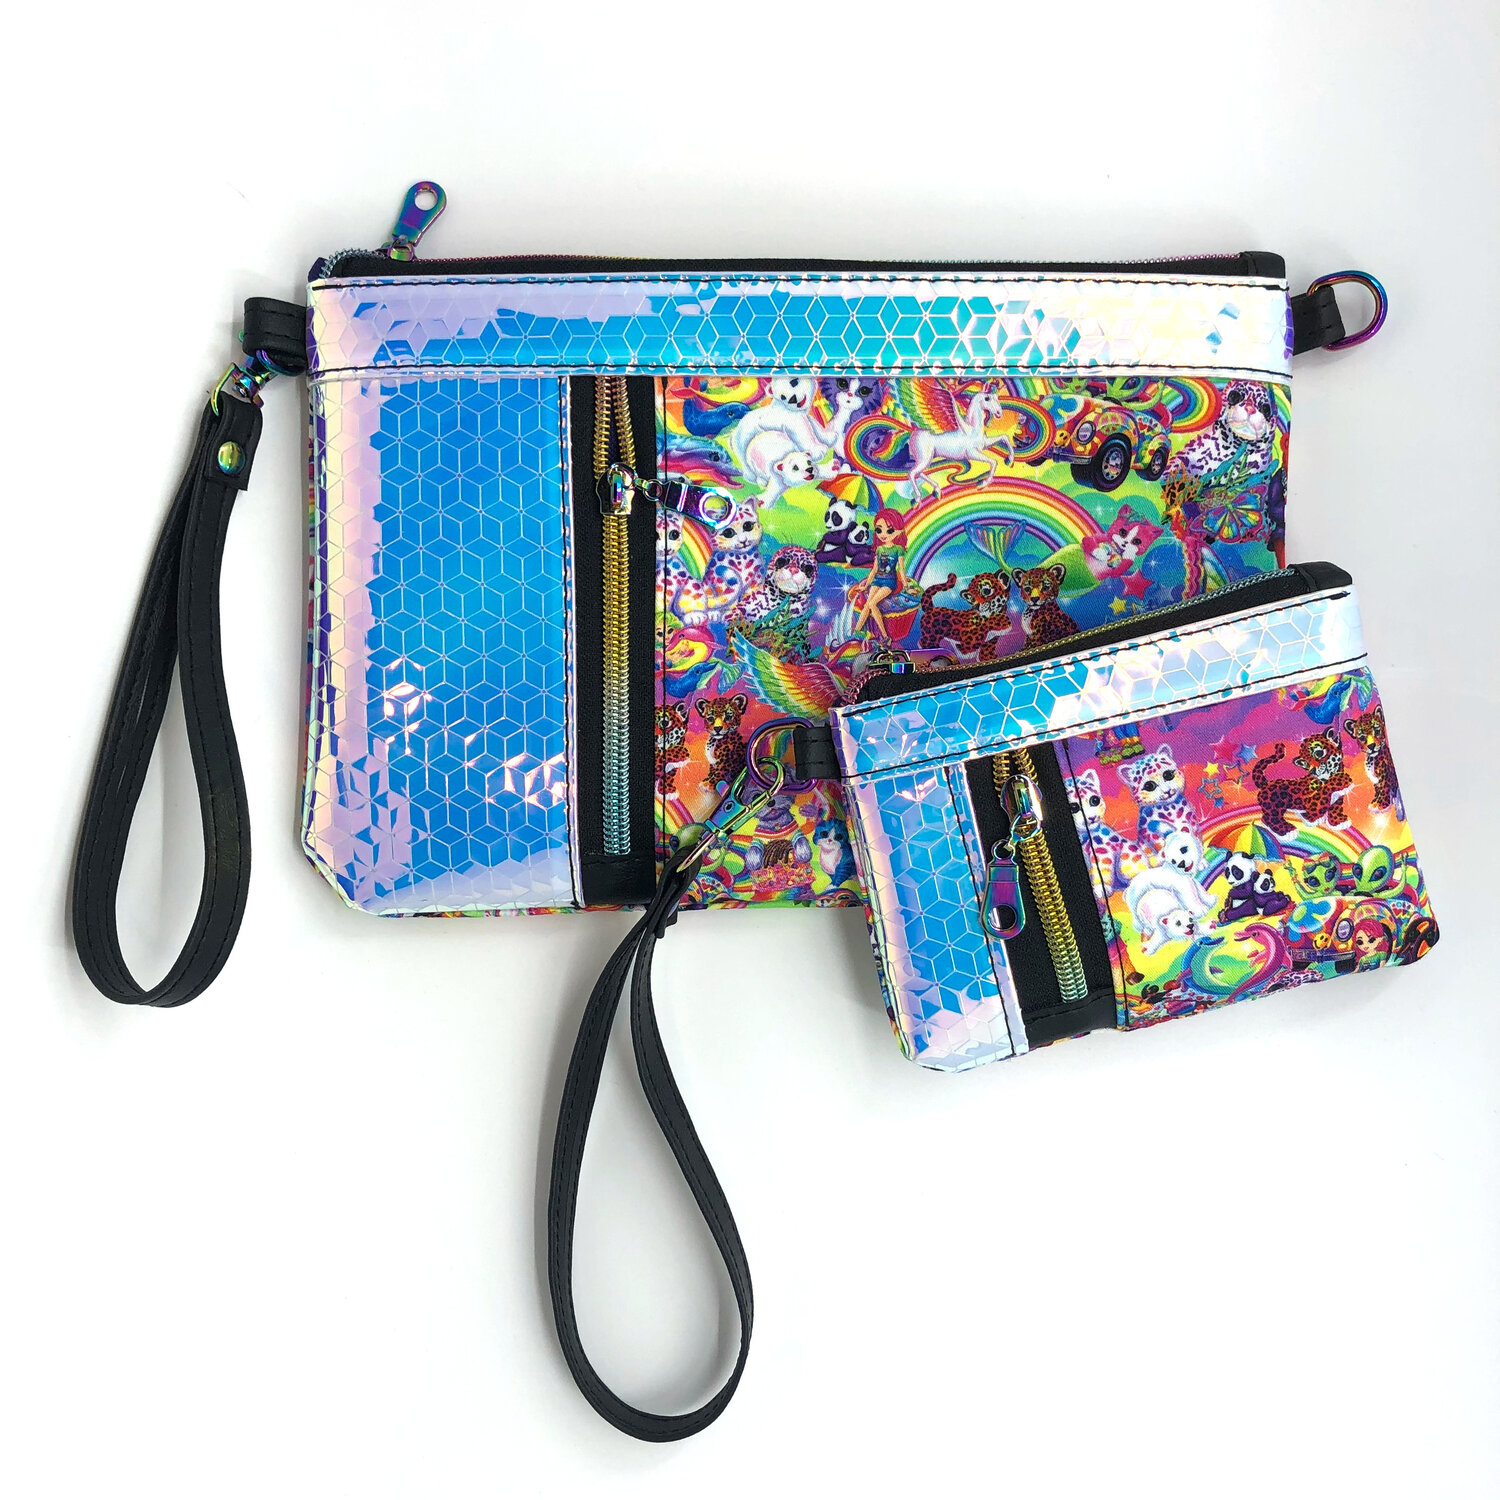 Lisa Frank Rainbows Unicorns Matching Sets - Wallet - Clutch